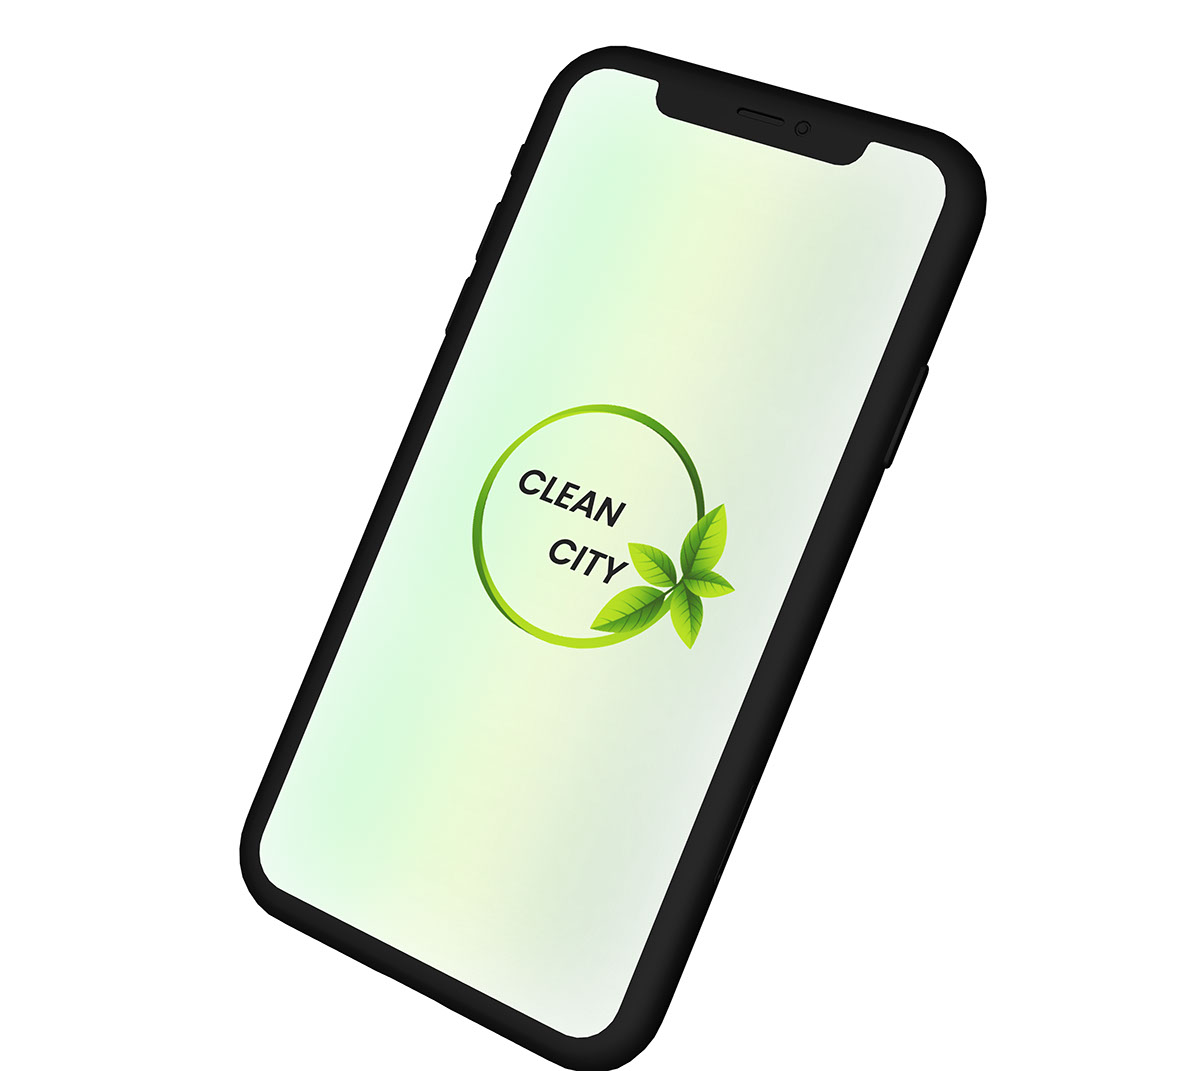 CleanCity rendition image